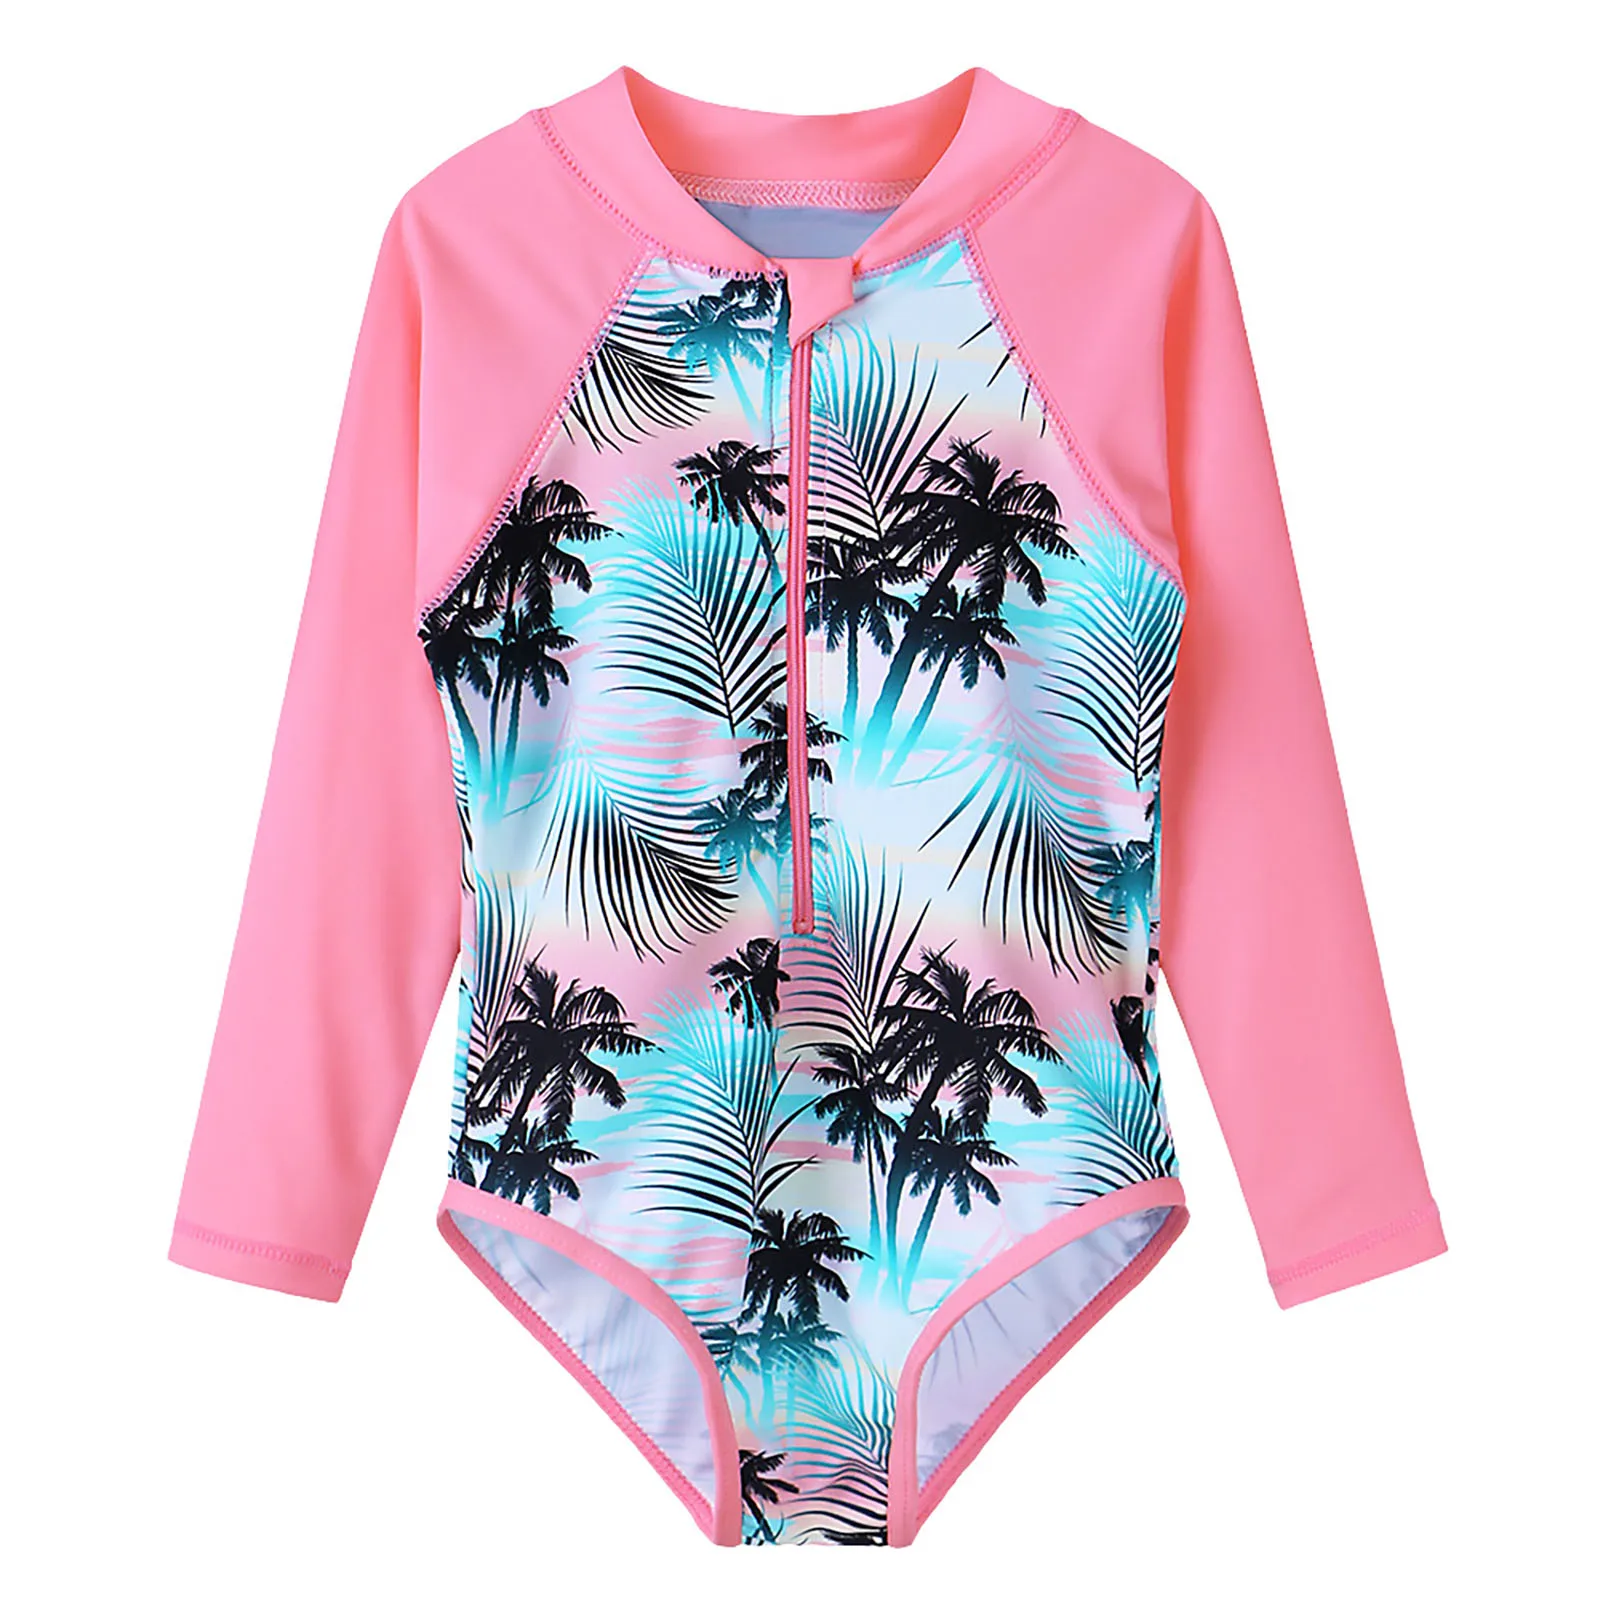 BAOHULU Print Girls Swimwear Long Sleeve One Piece Children's Swimsuit UPF 50+ Surfing Suit Kids Summer Bathing Suit 1